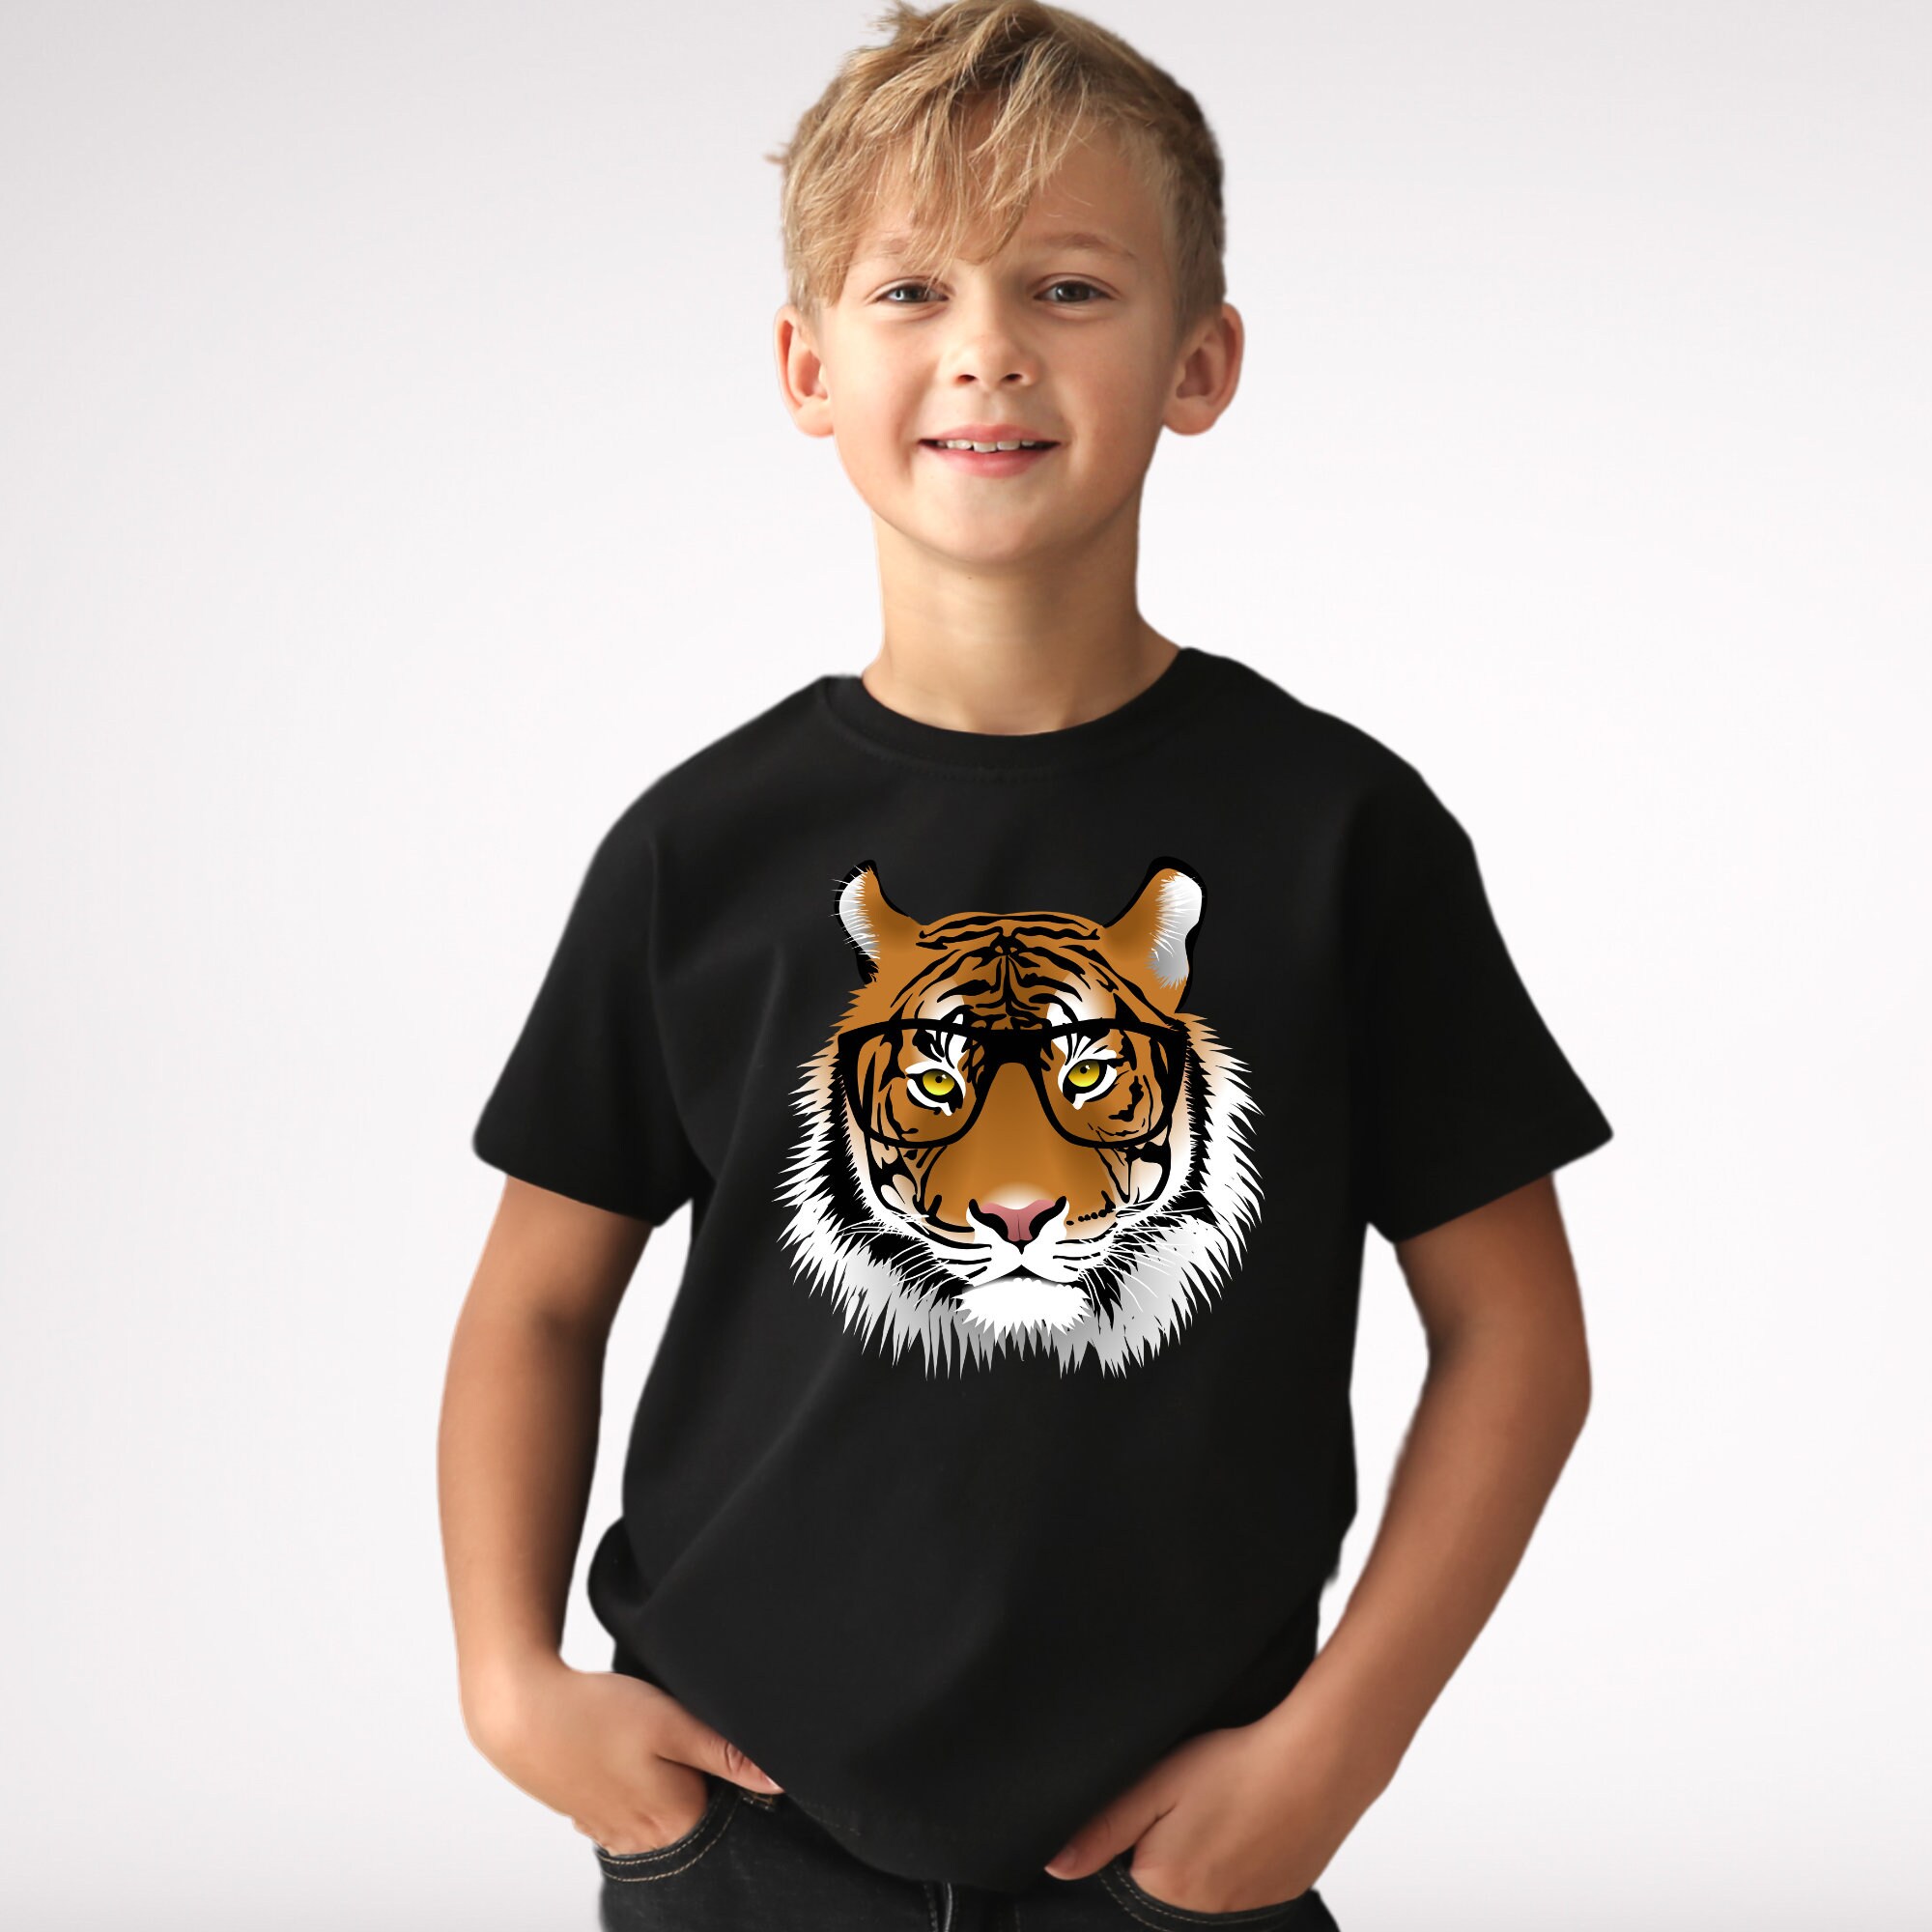 Tiger Clothing Etsy